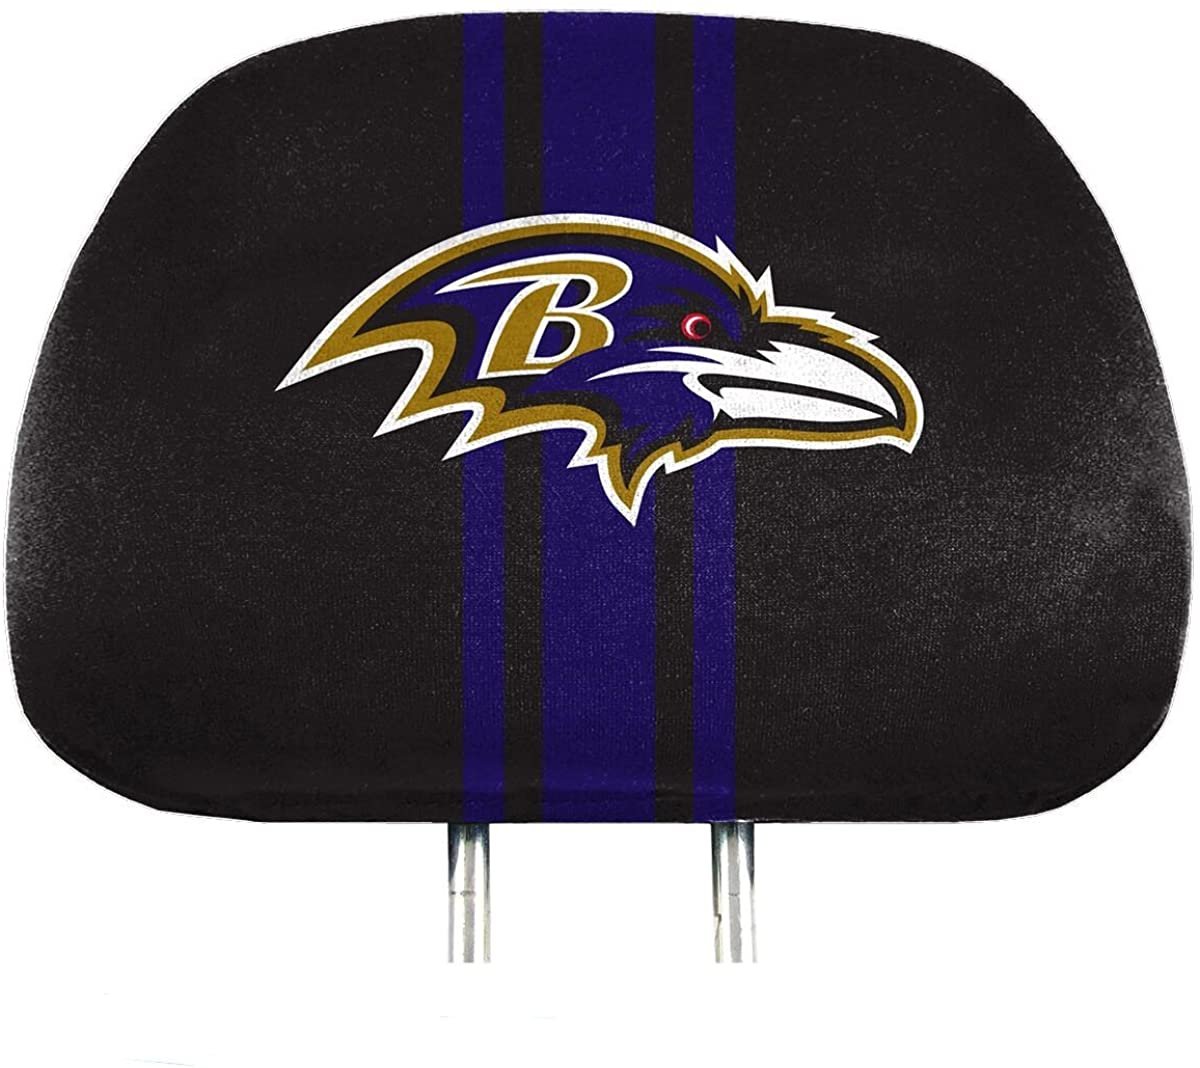 Baltimore Ravens Premium Pair of Auto Head Rest Covers, Full Color Printed, Elastic, 10x14 Inch